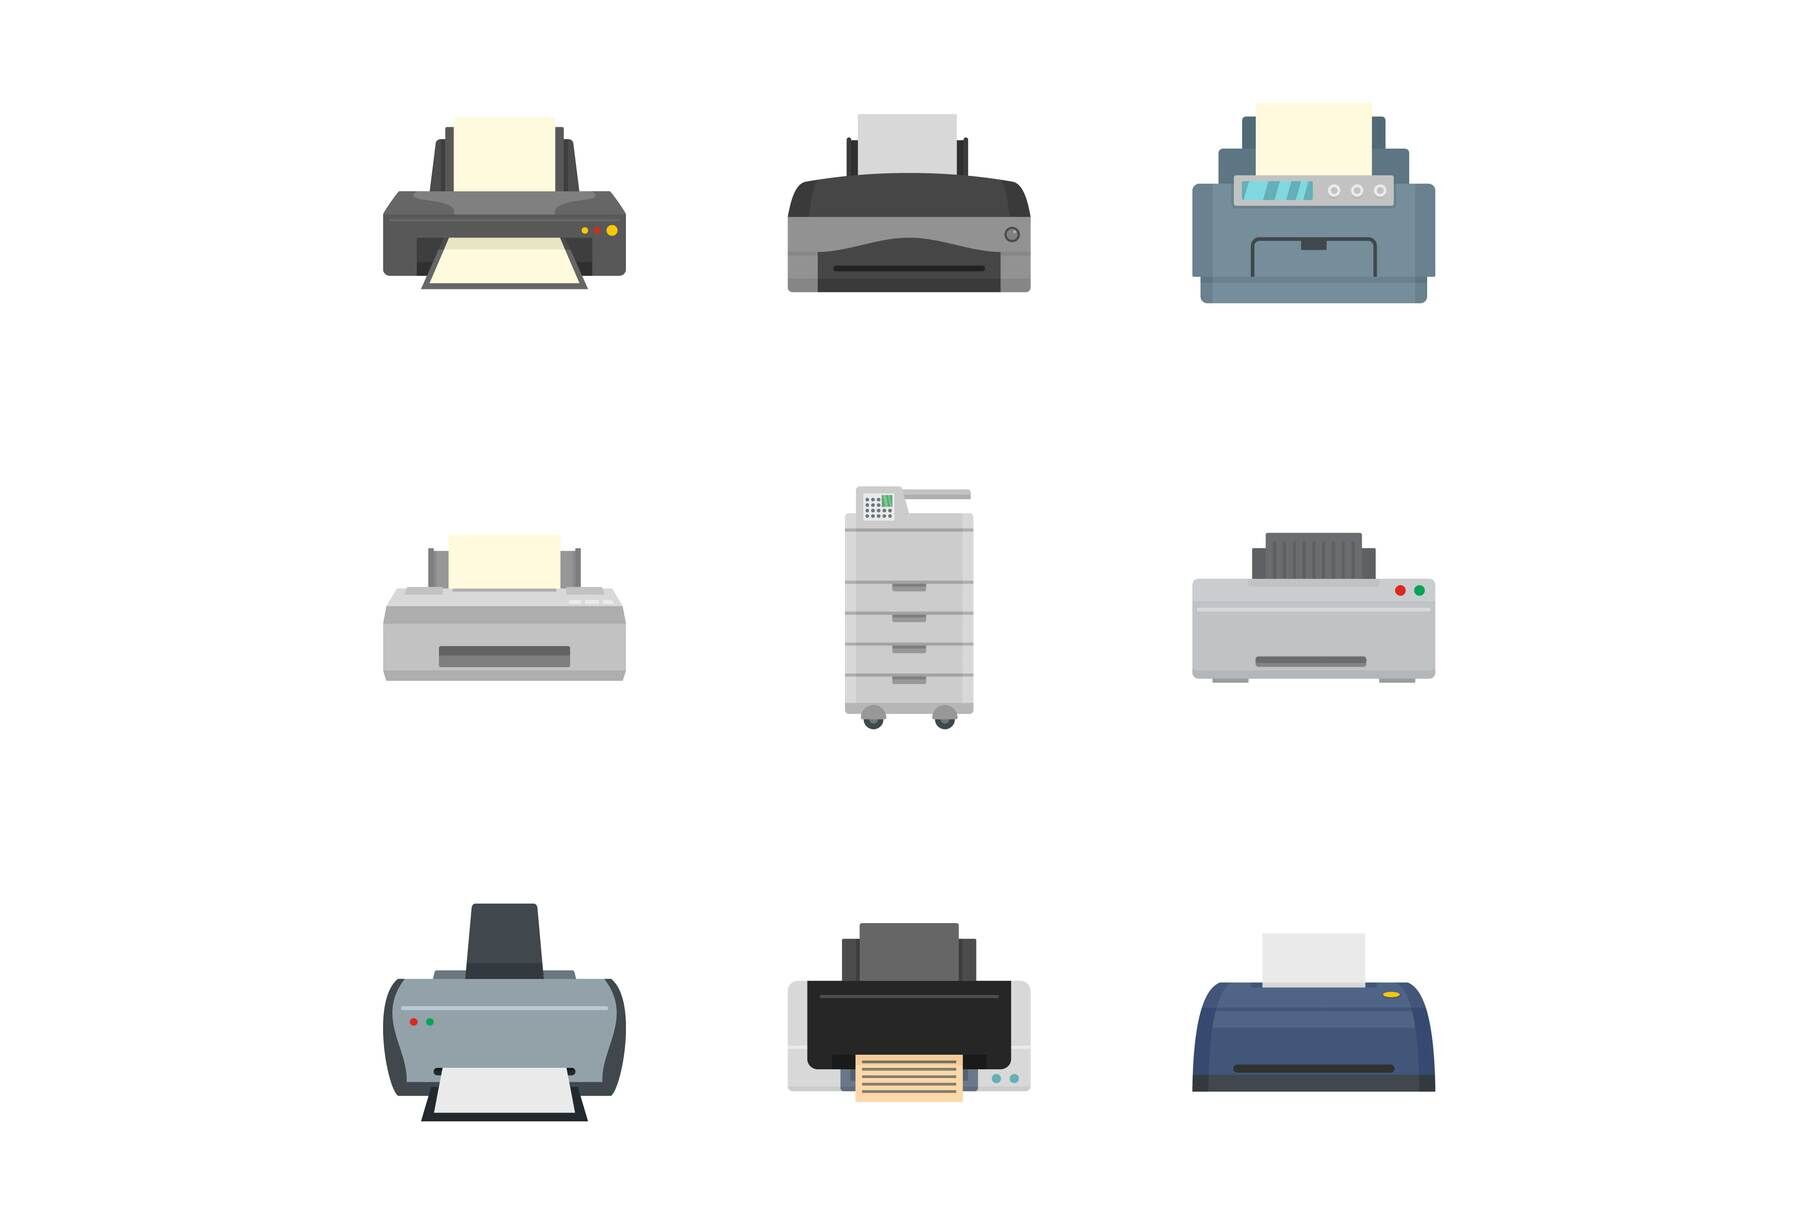 laser printer icon